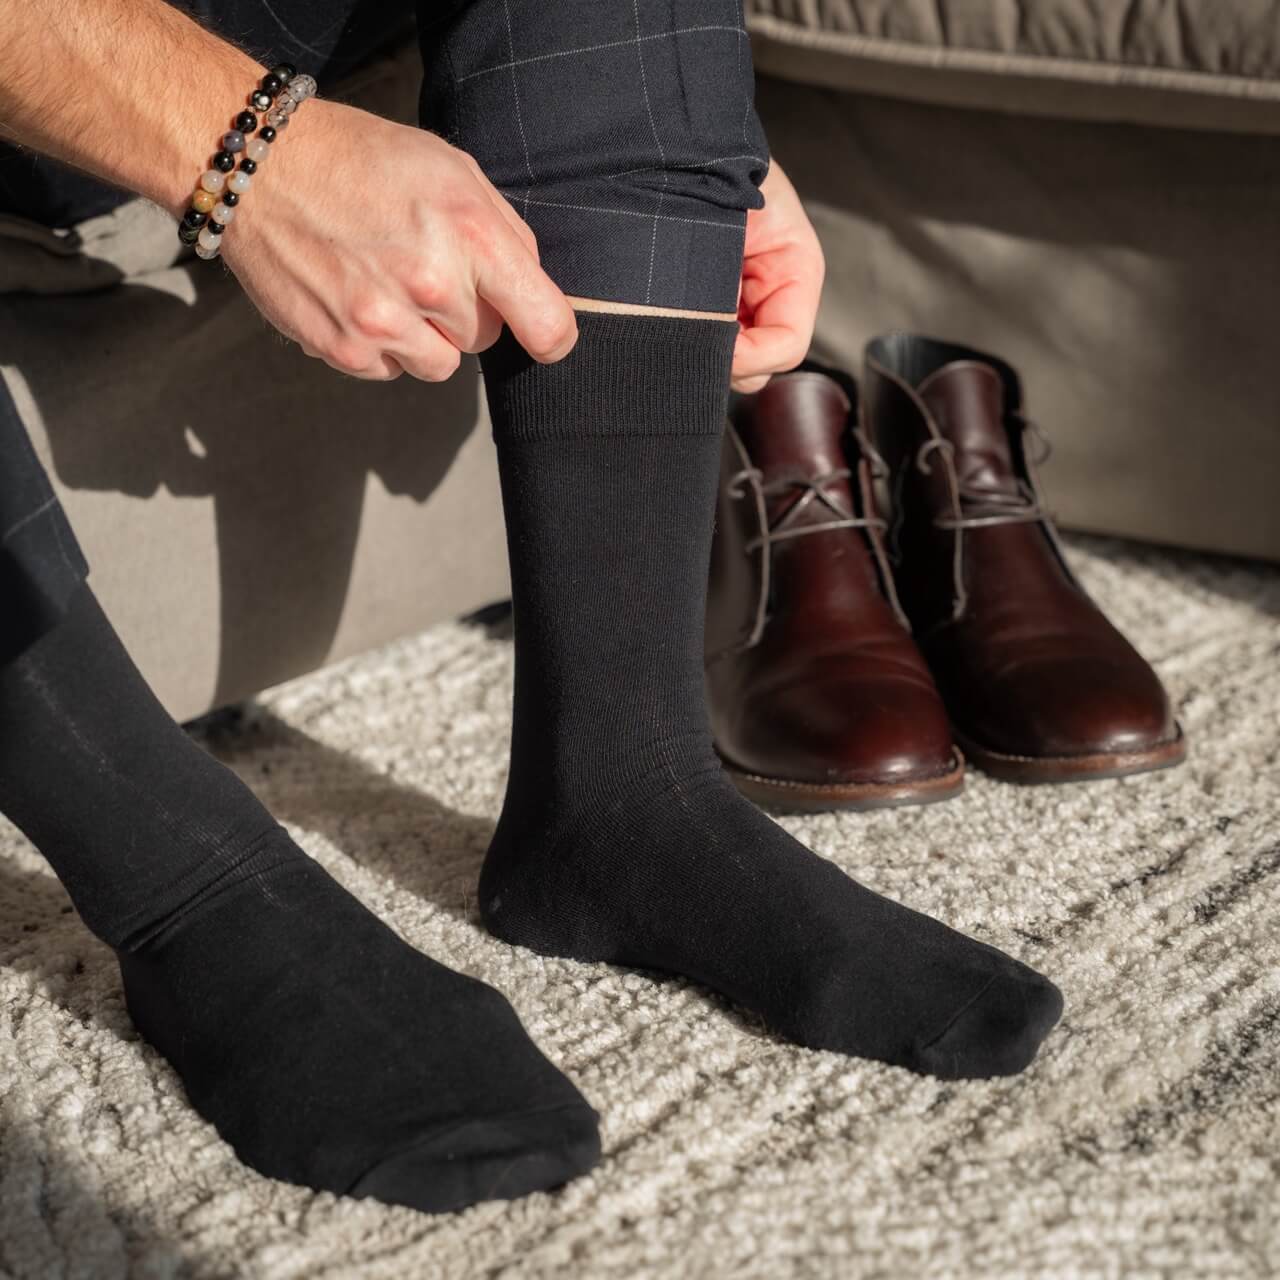 men's black dress socks